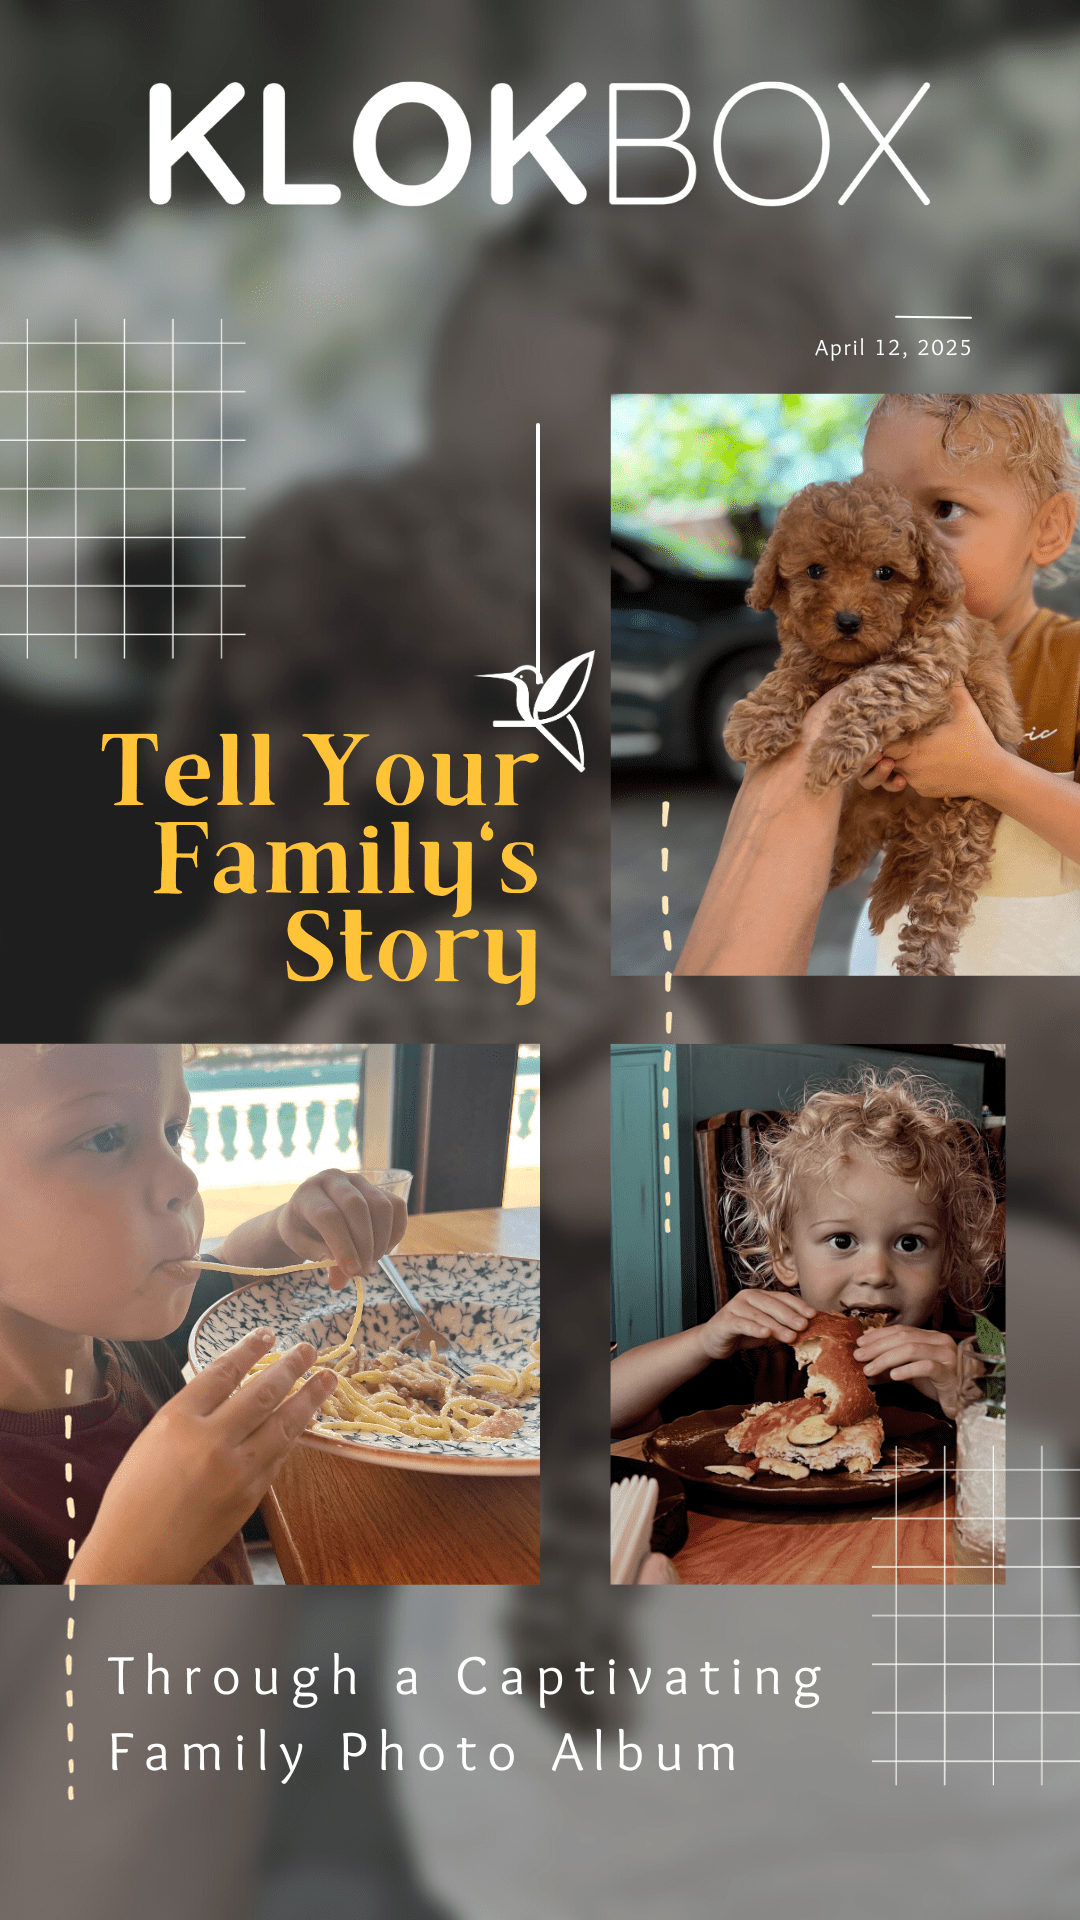 Tell Your Family's Story Through a Captivating Family Photo Album on Klokbox